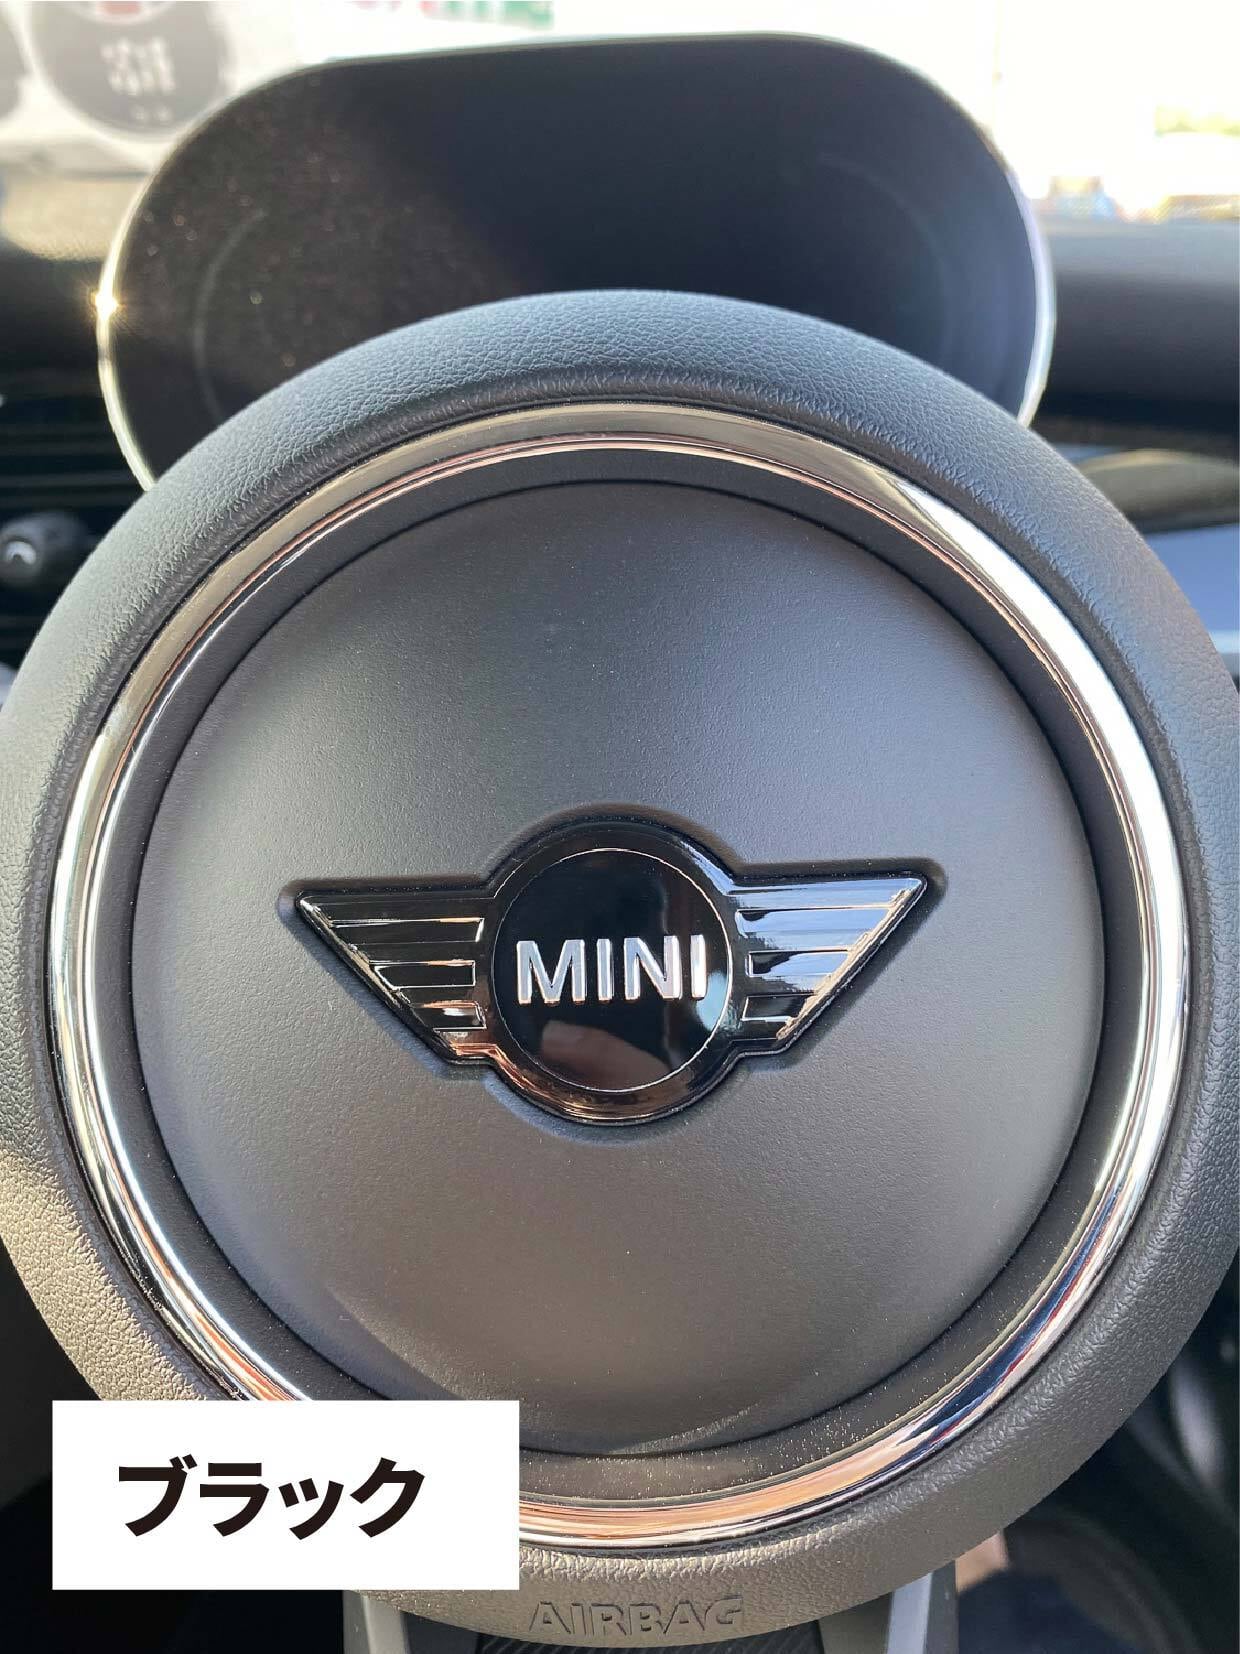 DK5】MINI ステアリング エンブレムステッカー ミニガレージパラドックス【ミニクーパー・BMW MINI グッズ・パーツ販売中】